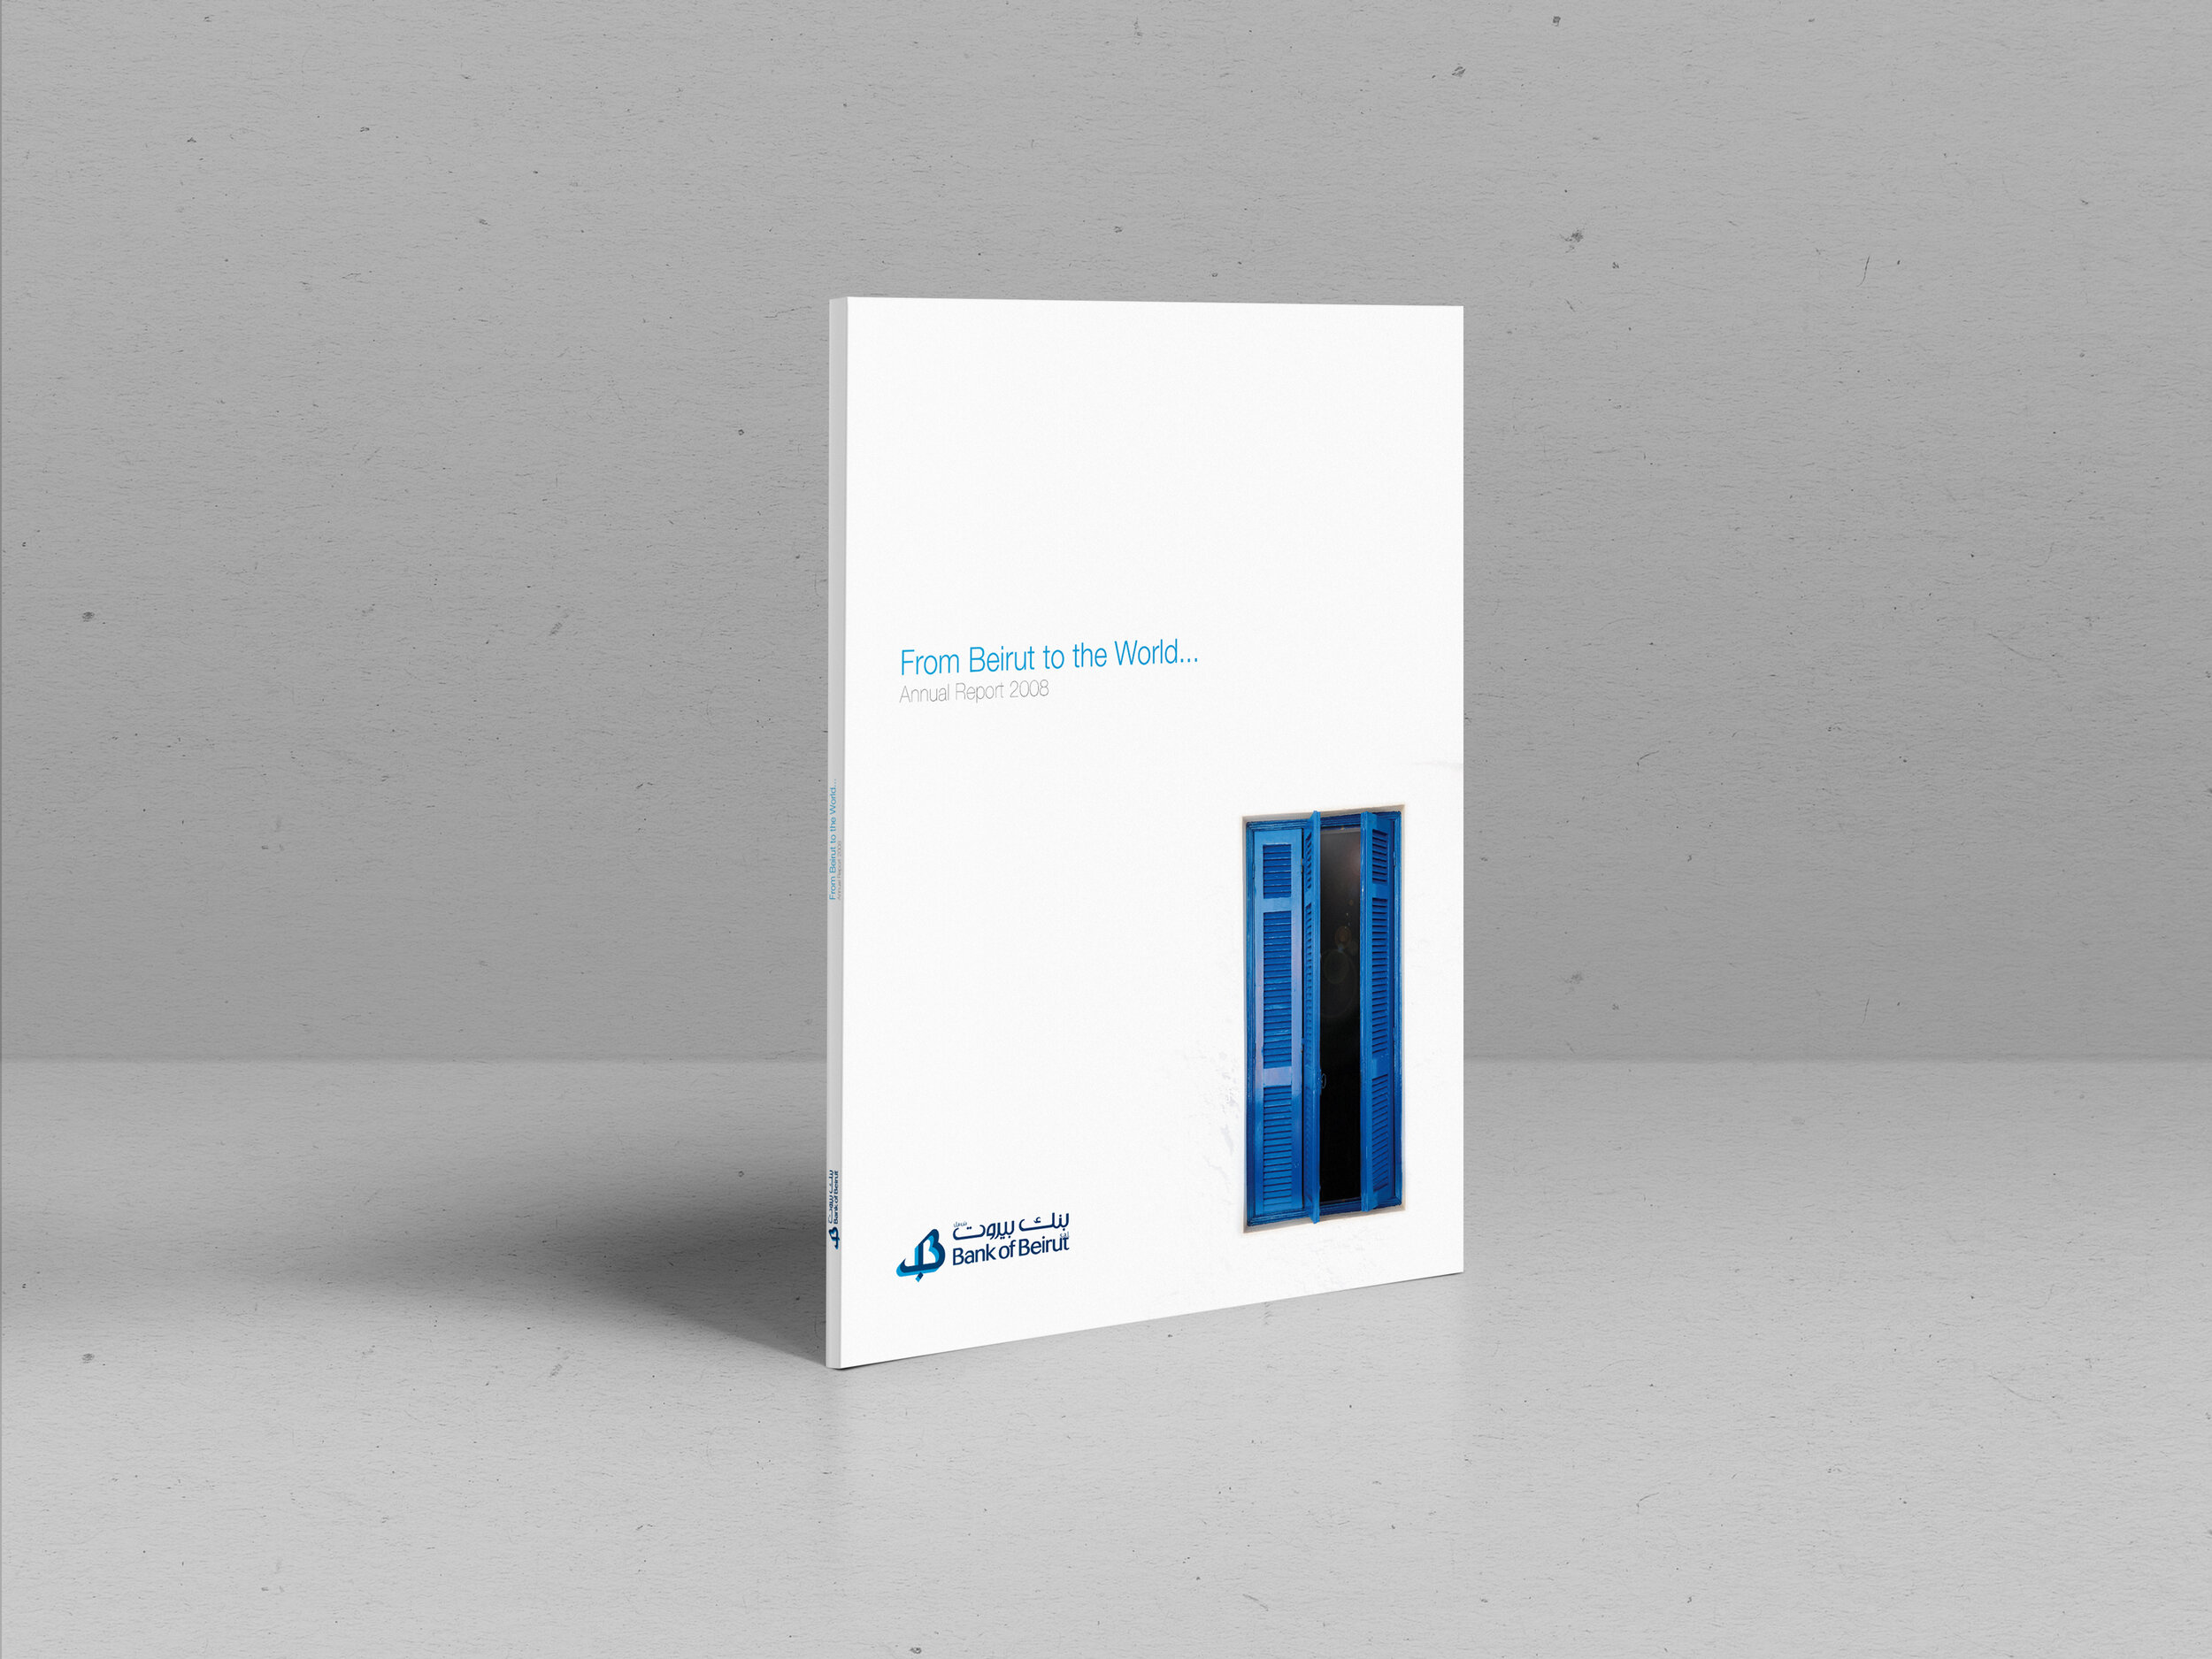 BOB_Bank_of_beirut_annual_report_2008_creative_layout_design_book_print_cover_circle_agency_uae_dubai_visual_communication_1.jpg